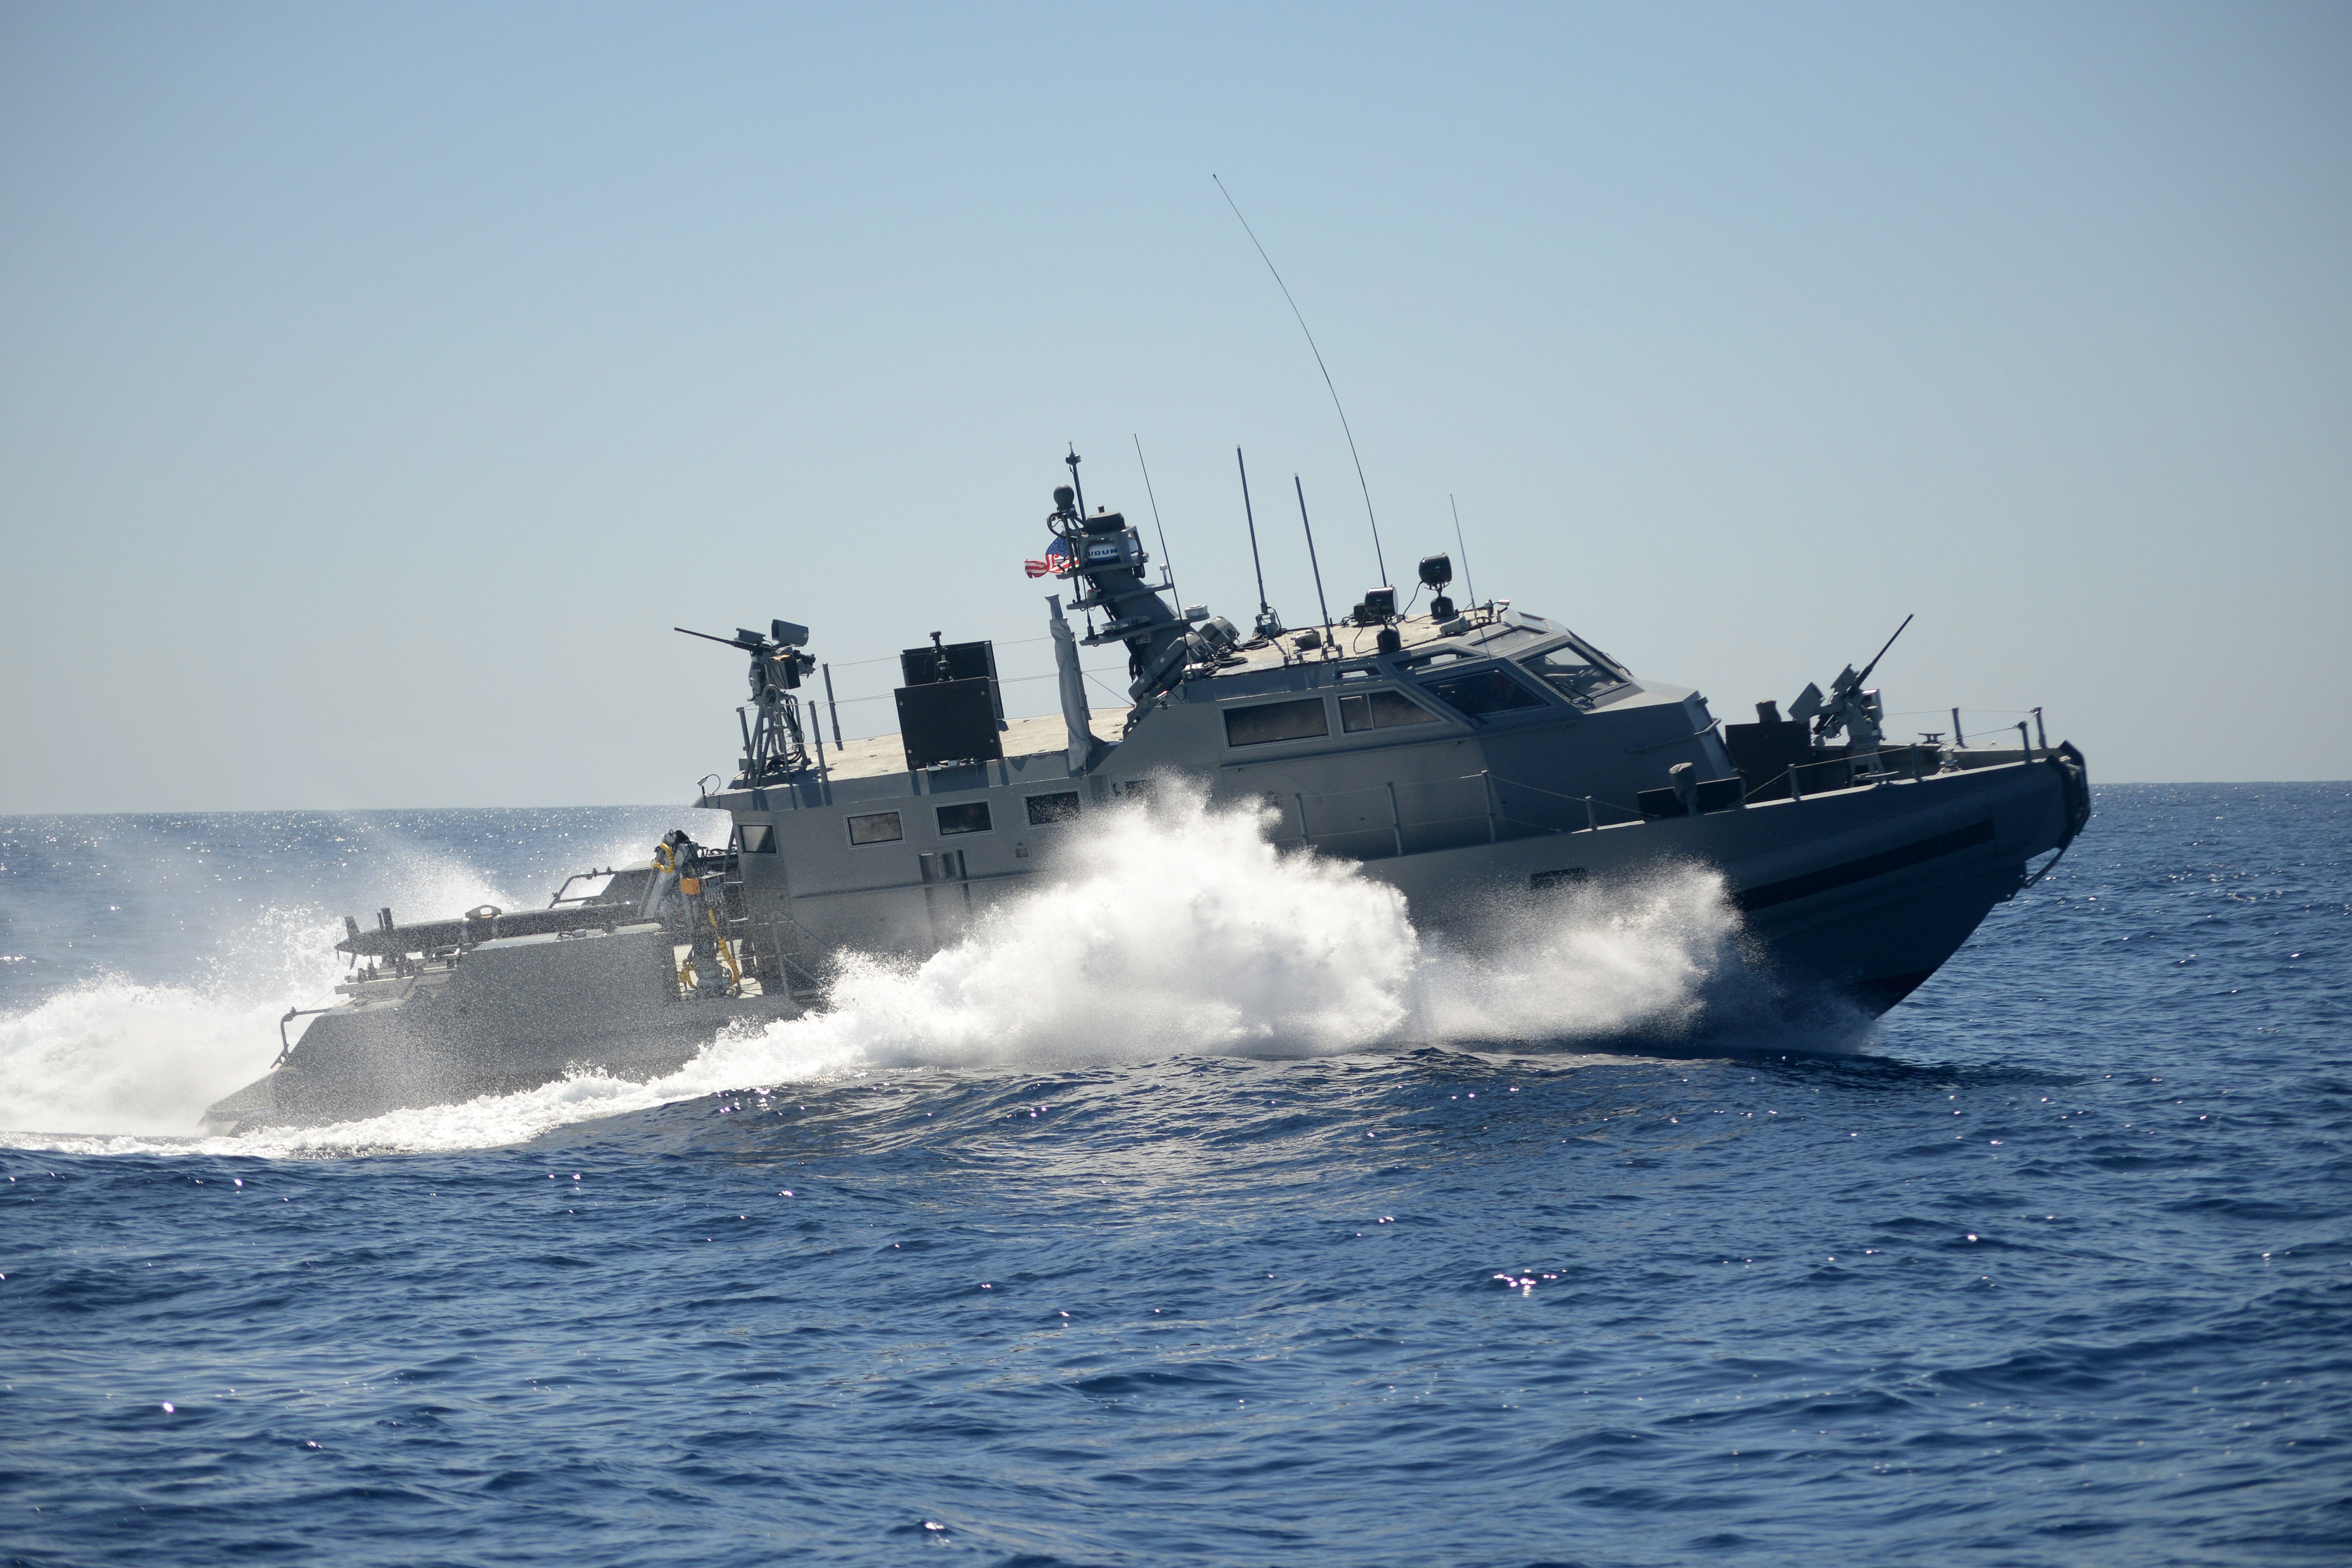 US_Navy_Coastal_Riverine_Group_1_Coastal_Command_Boat_off_San_Diego_2013.JPG